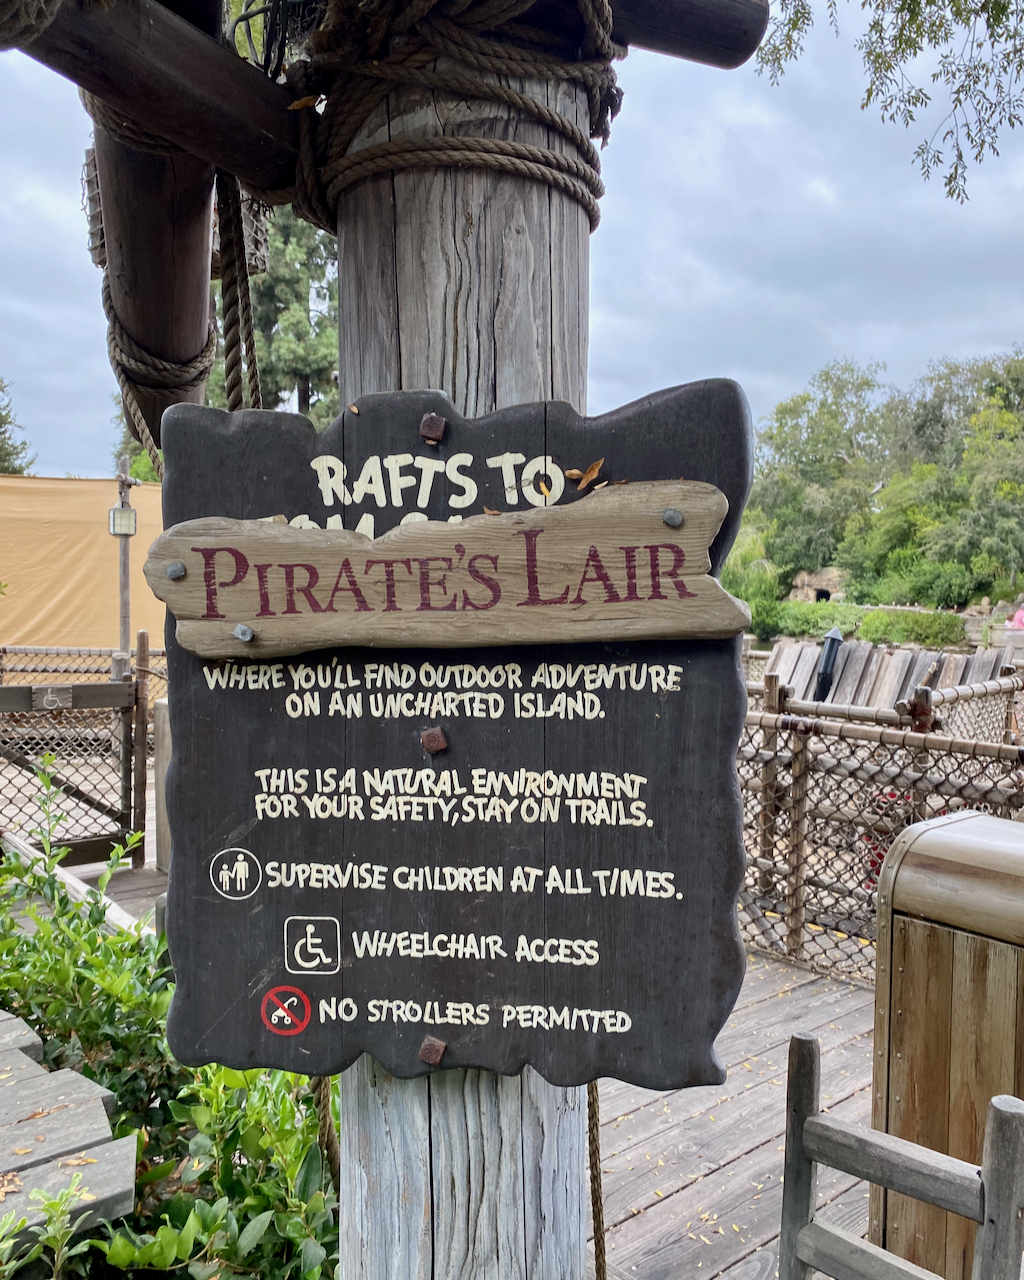 Pirates Lair Disneyland